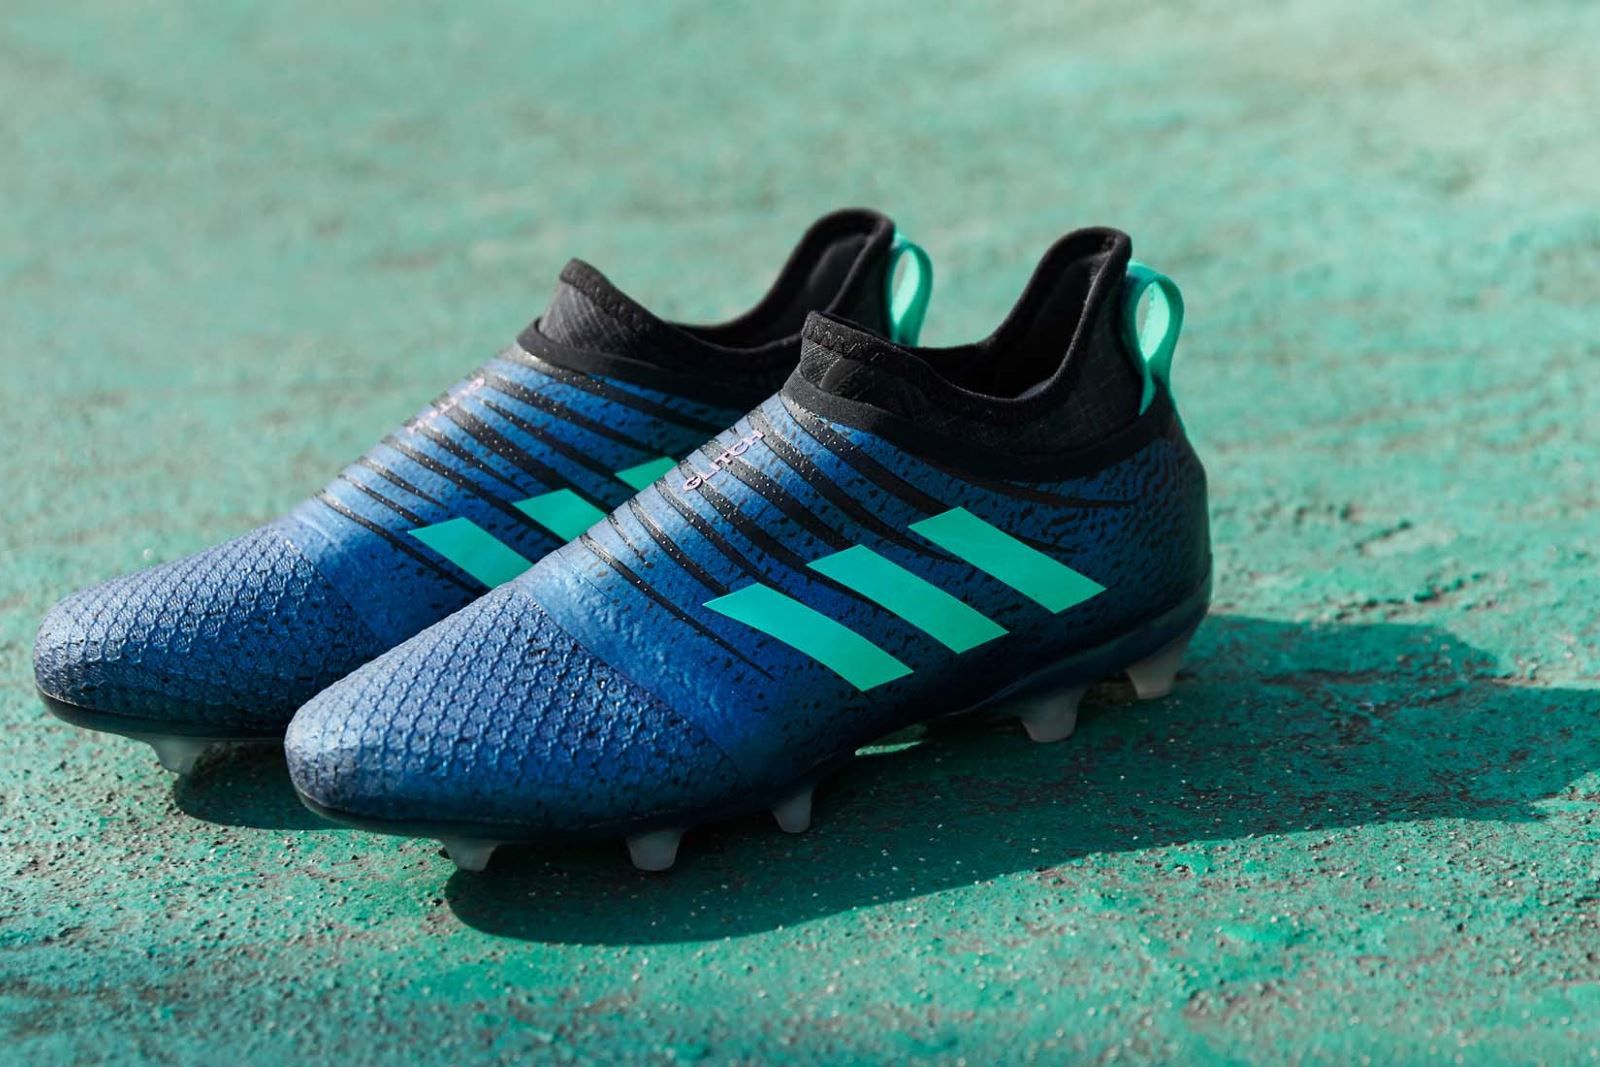 We speak to the designer of Adidas' interchangeable skin football boots